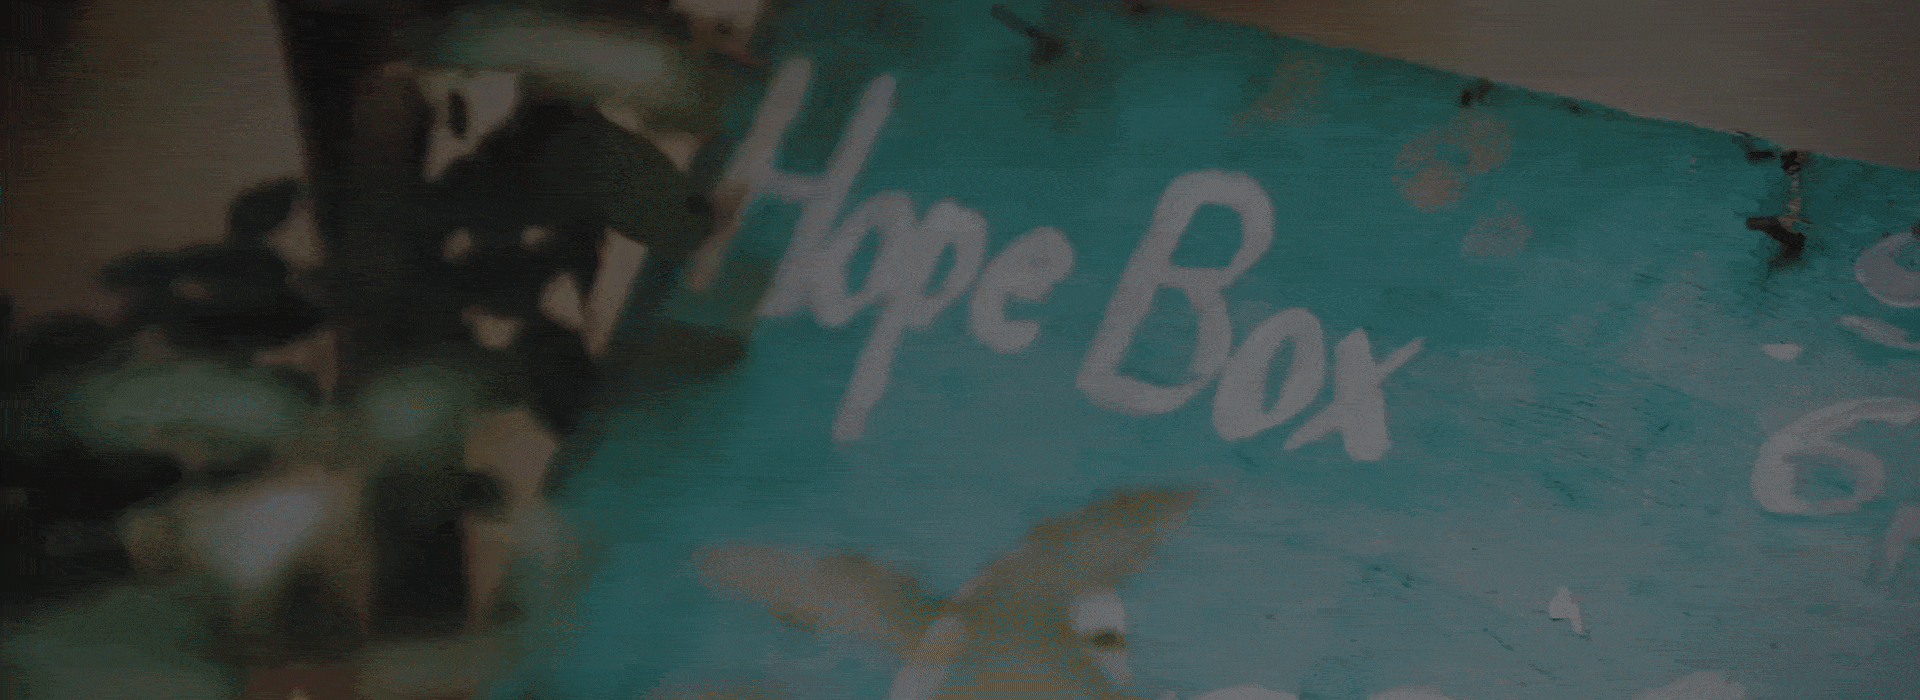 About HopeBox